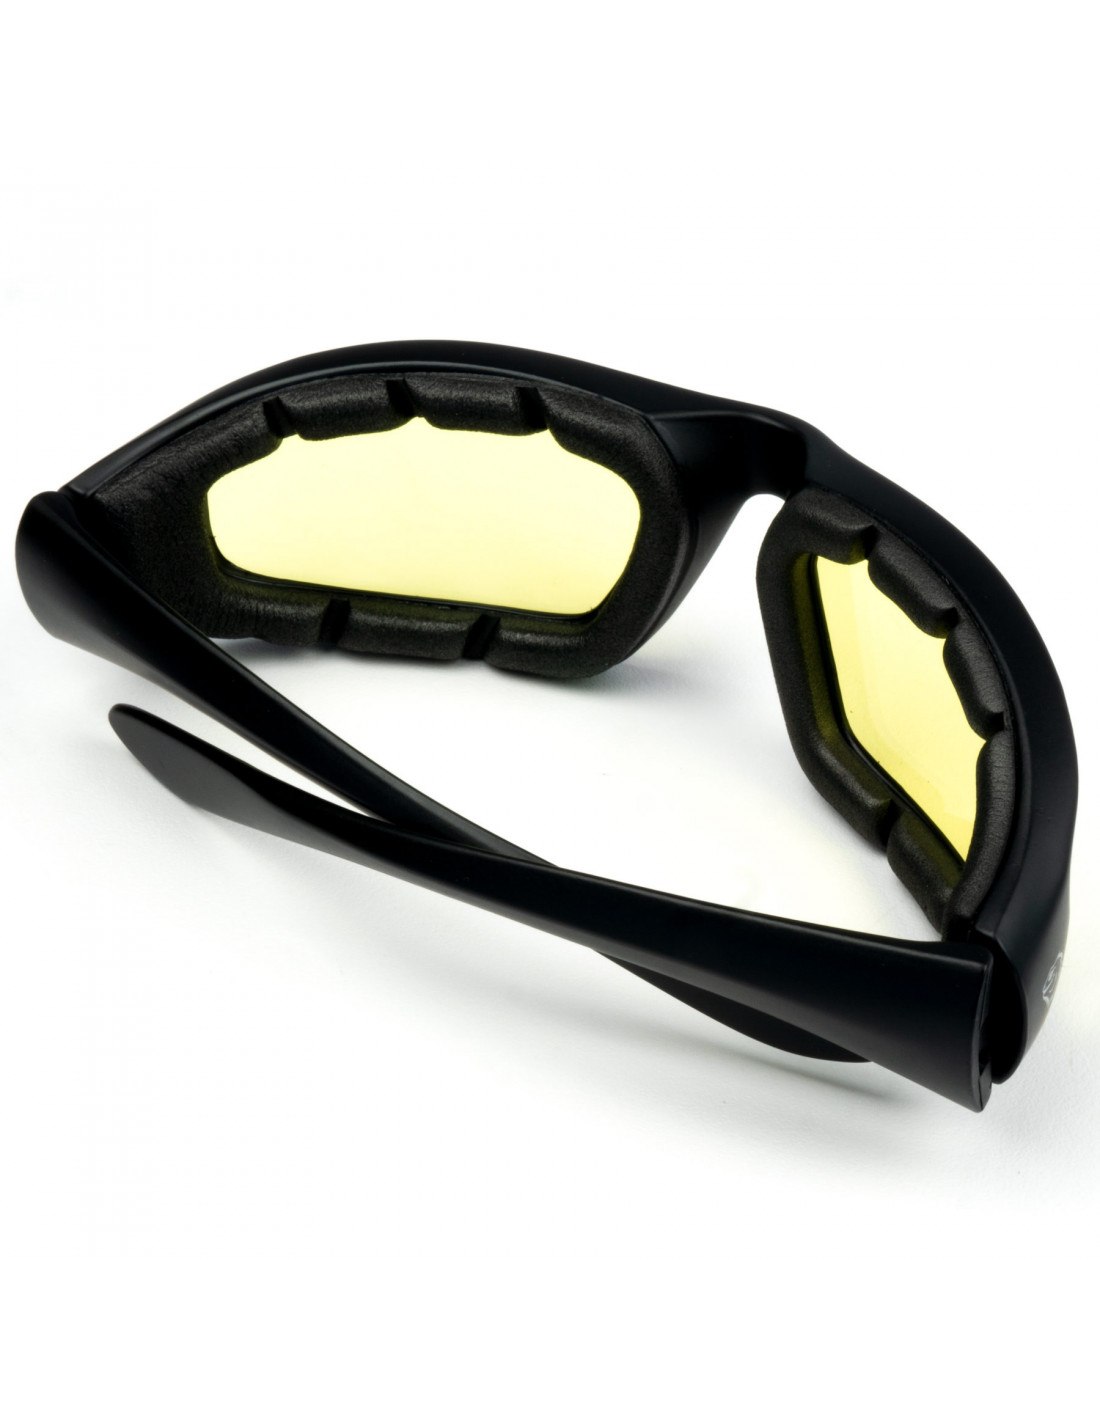 Gafas acolchadas de conducción nocturna para motocicleta, marco negro 011  con lentes amarillas